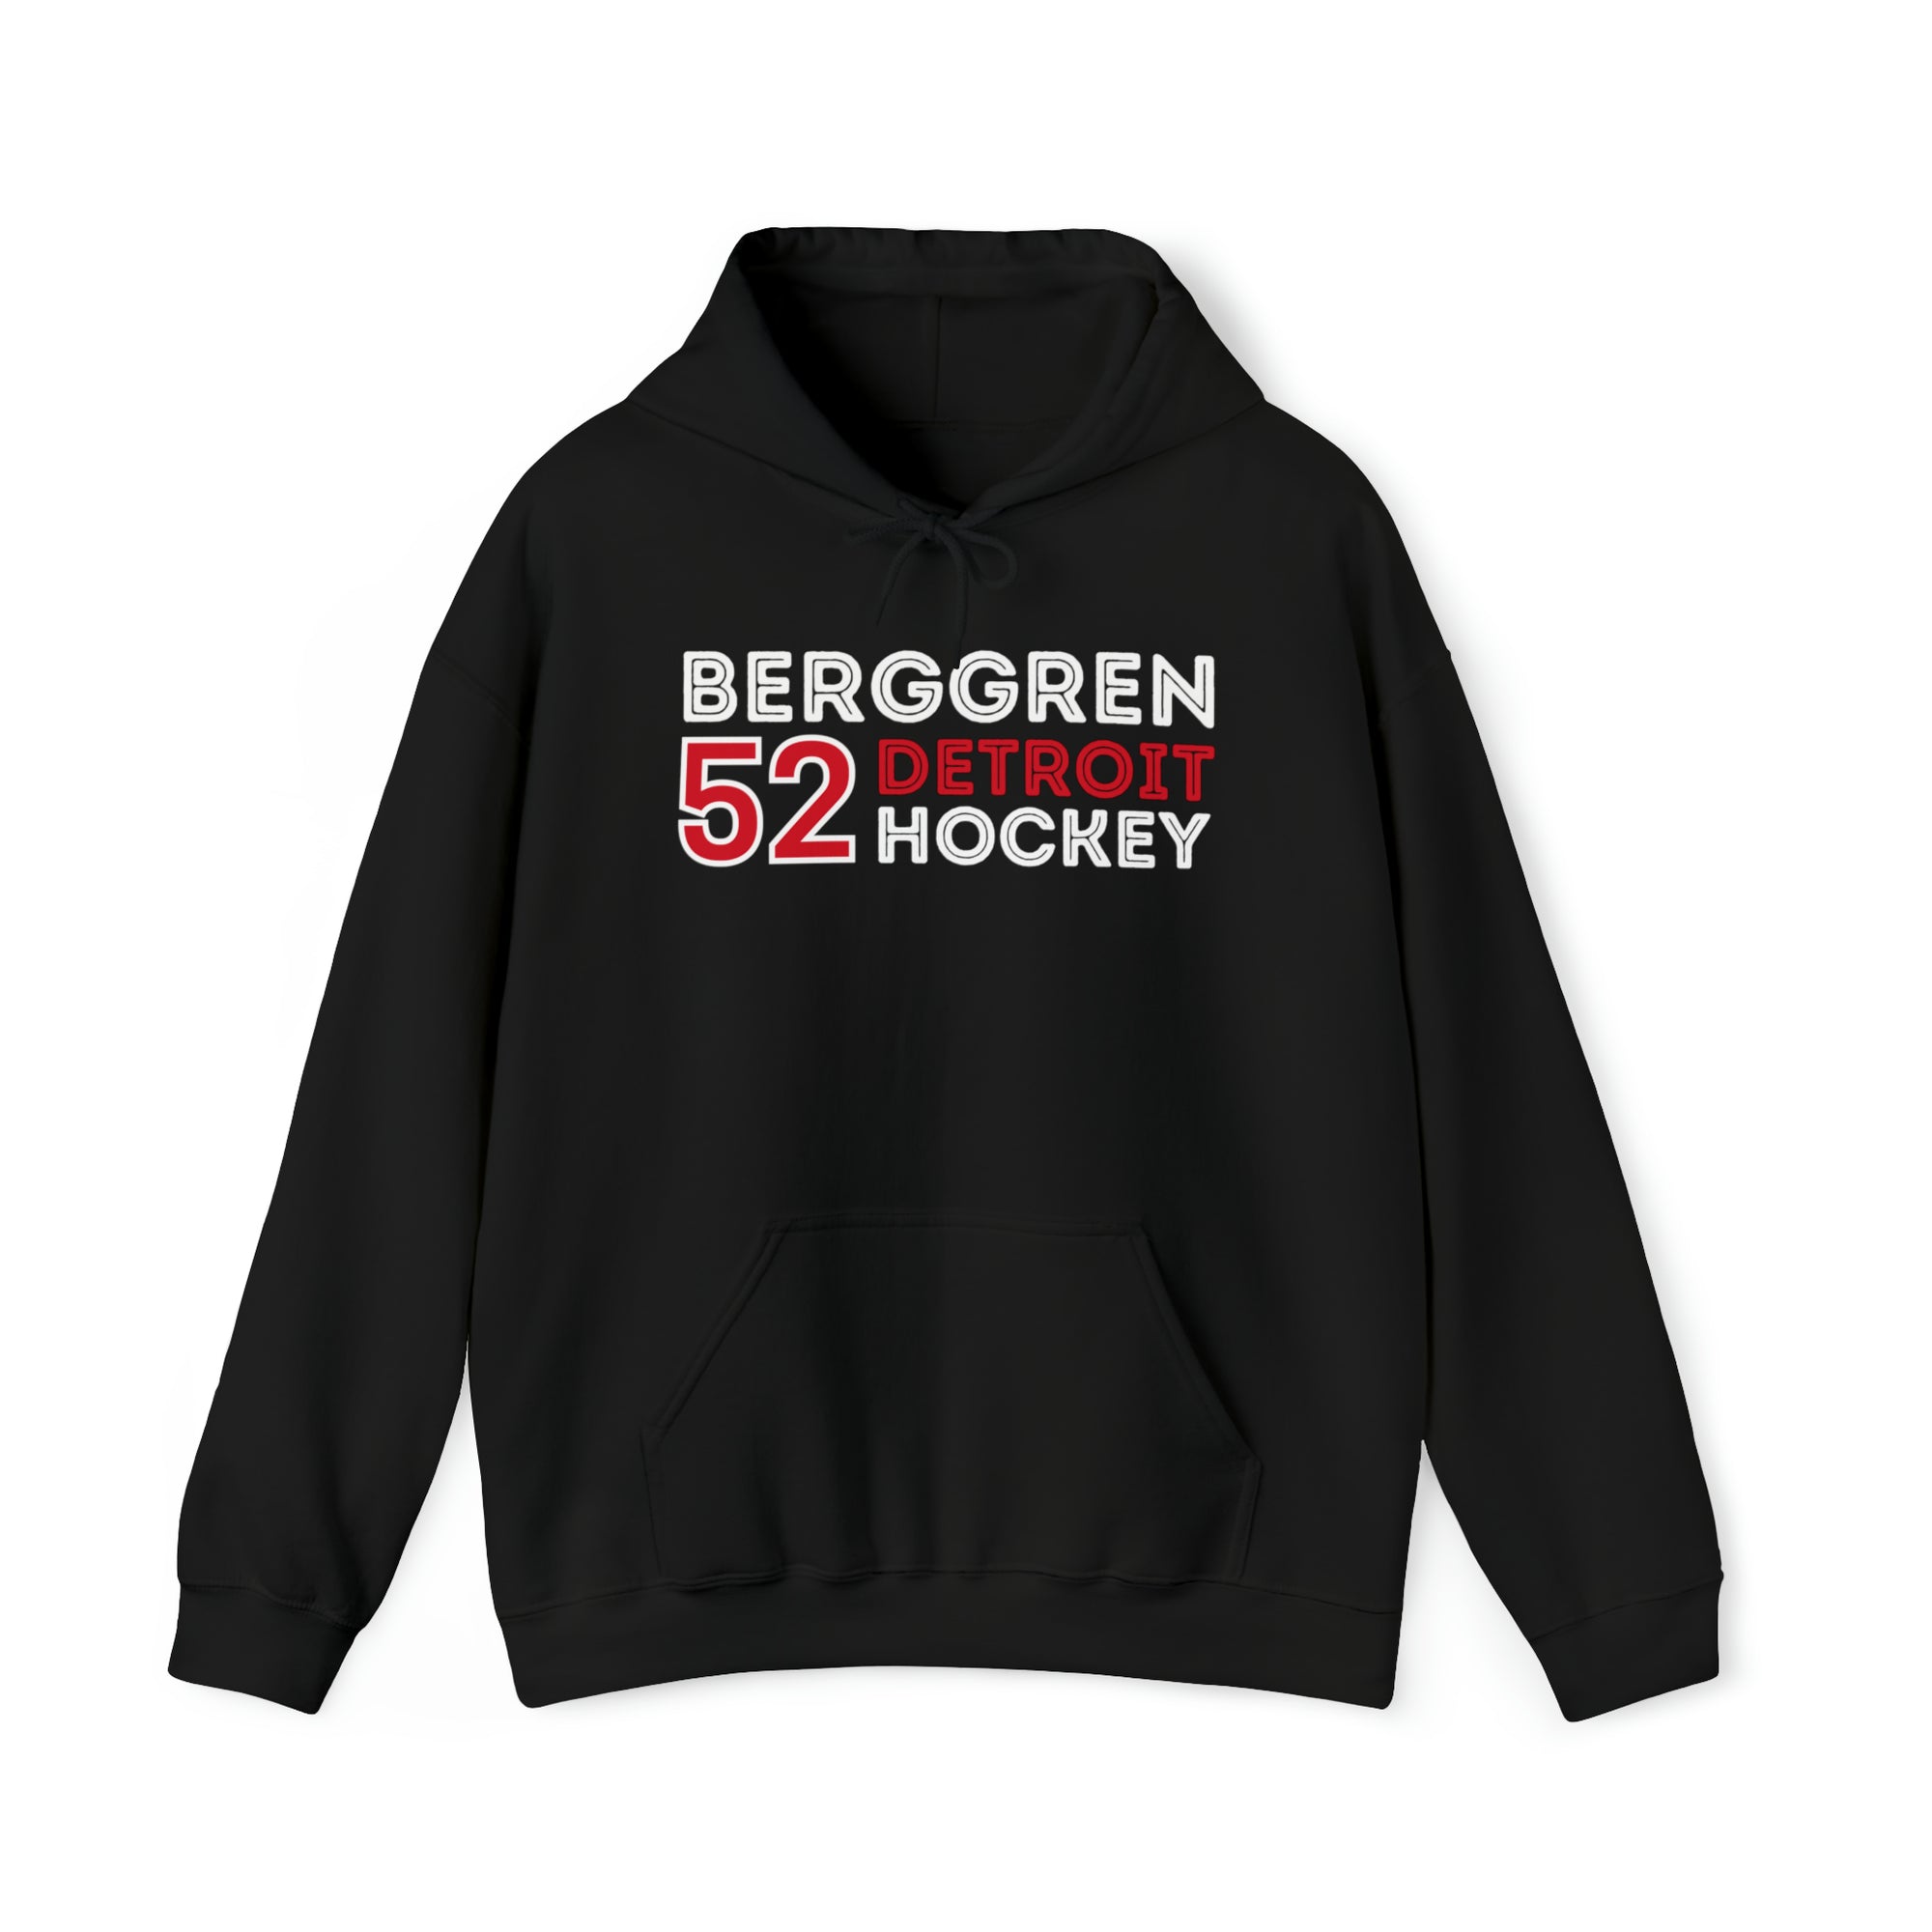 Berggren 52 Detroit Hockey Grafitti Wall Design Unisex Hooded Sweatshirt